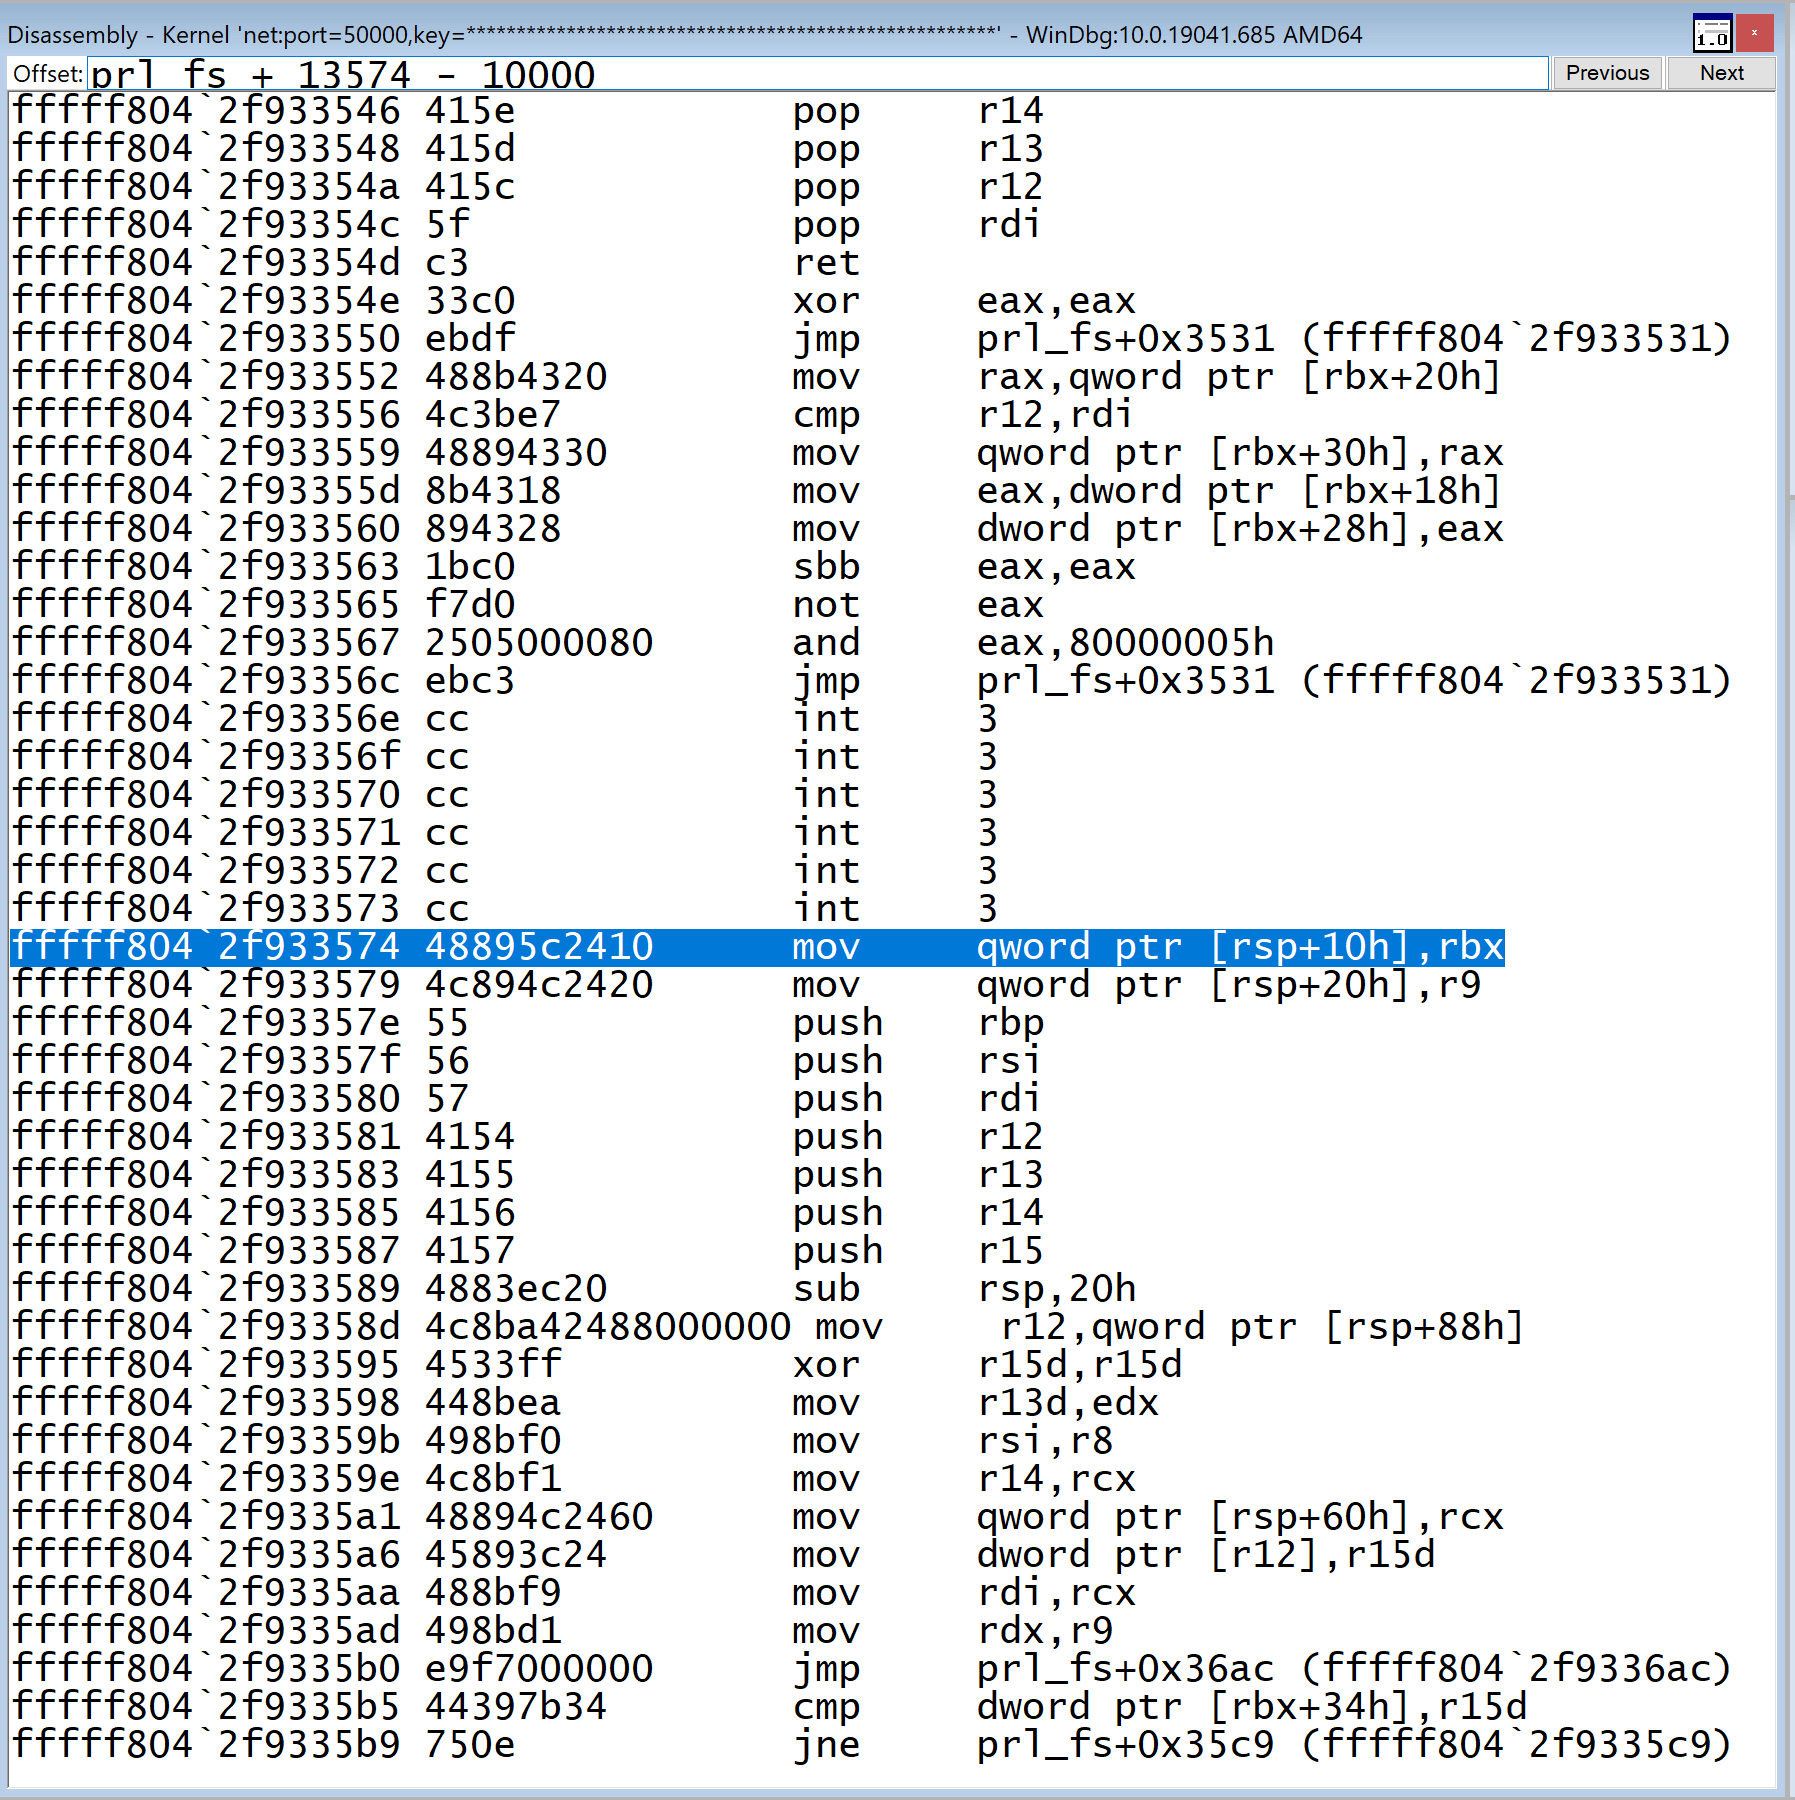 Remote debugging windows kernel driver(without symbols) using windbg